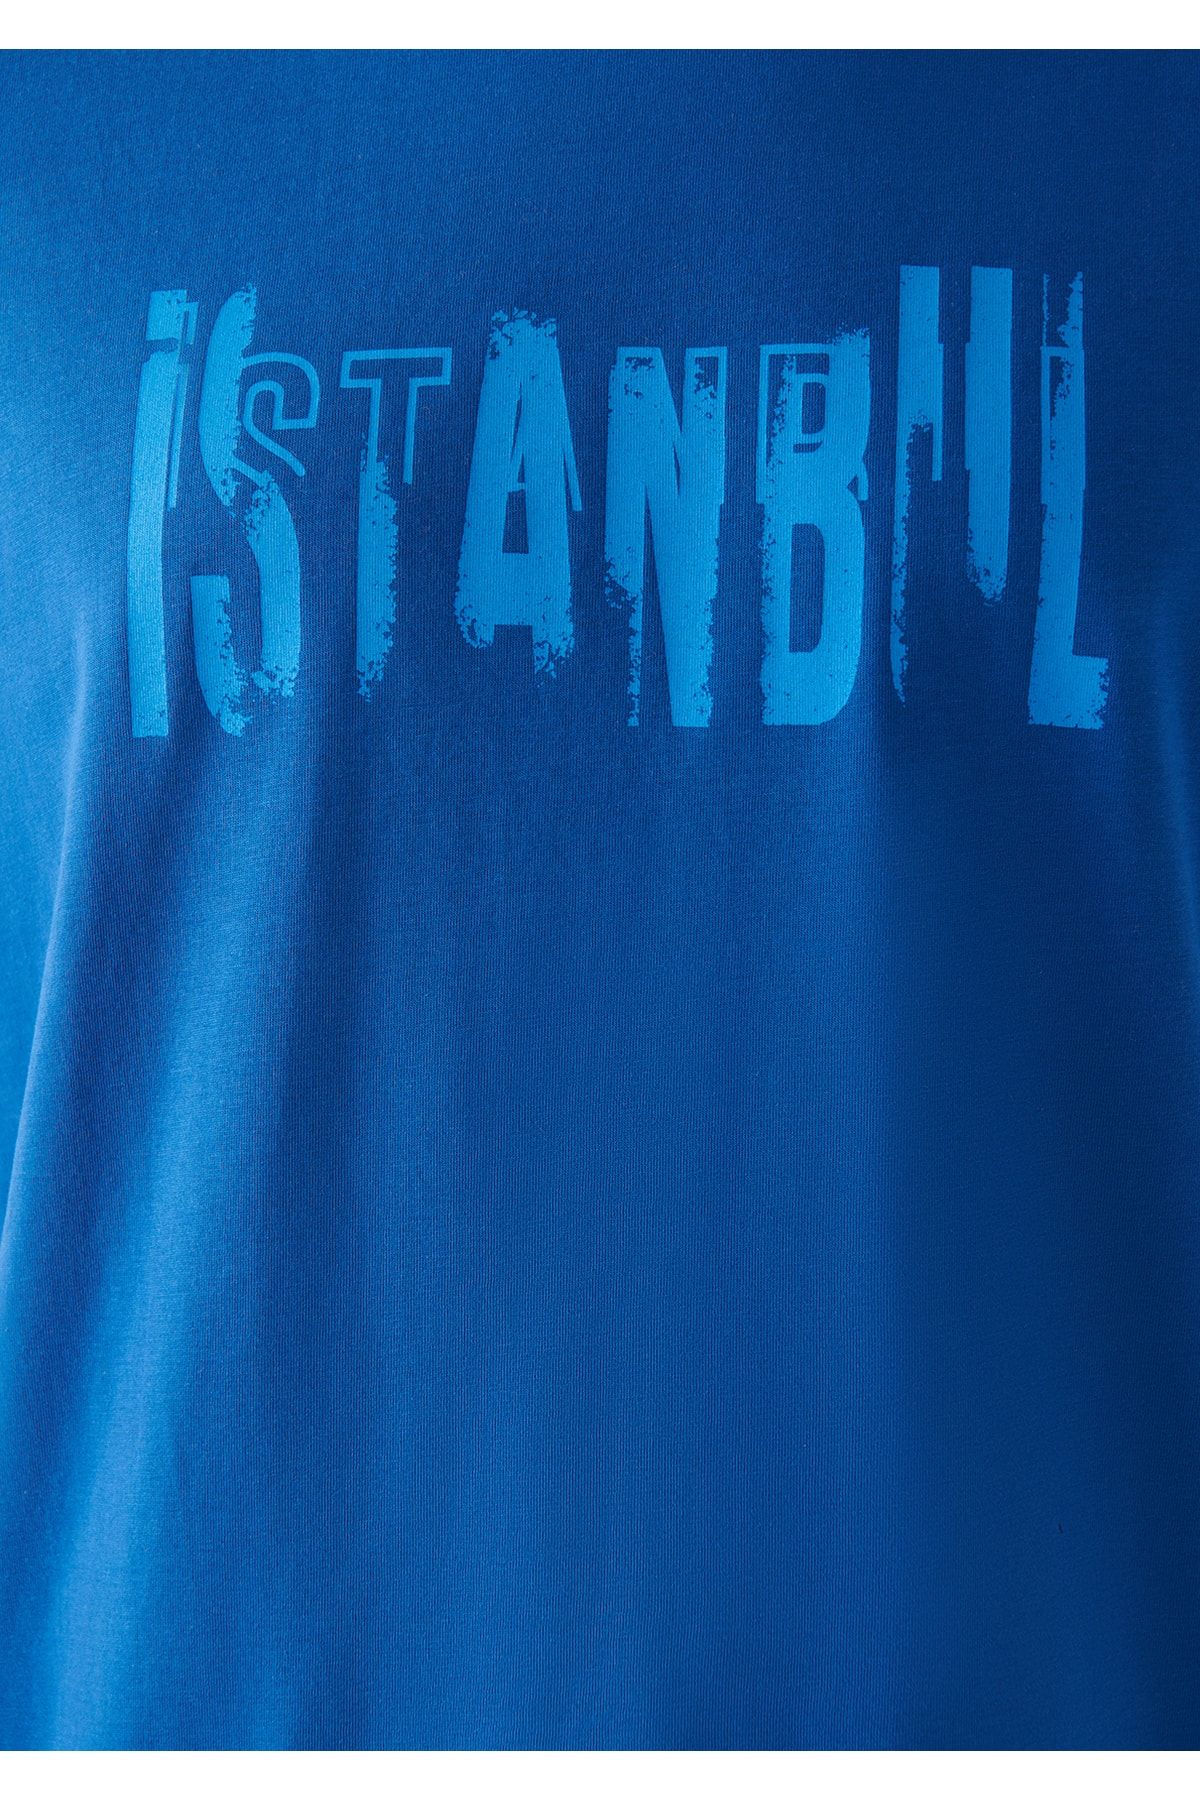 Mavi تی شرت کاشی چاپی استانبول مناسب / برش معمولی 067116-80956